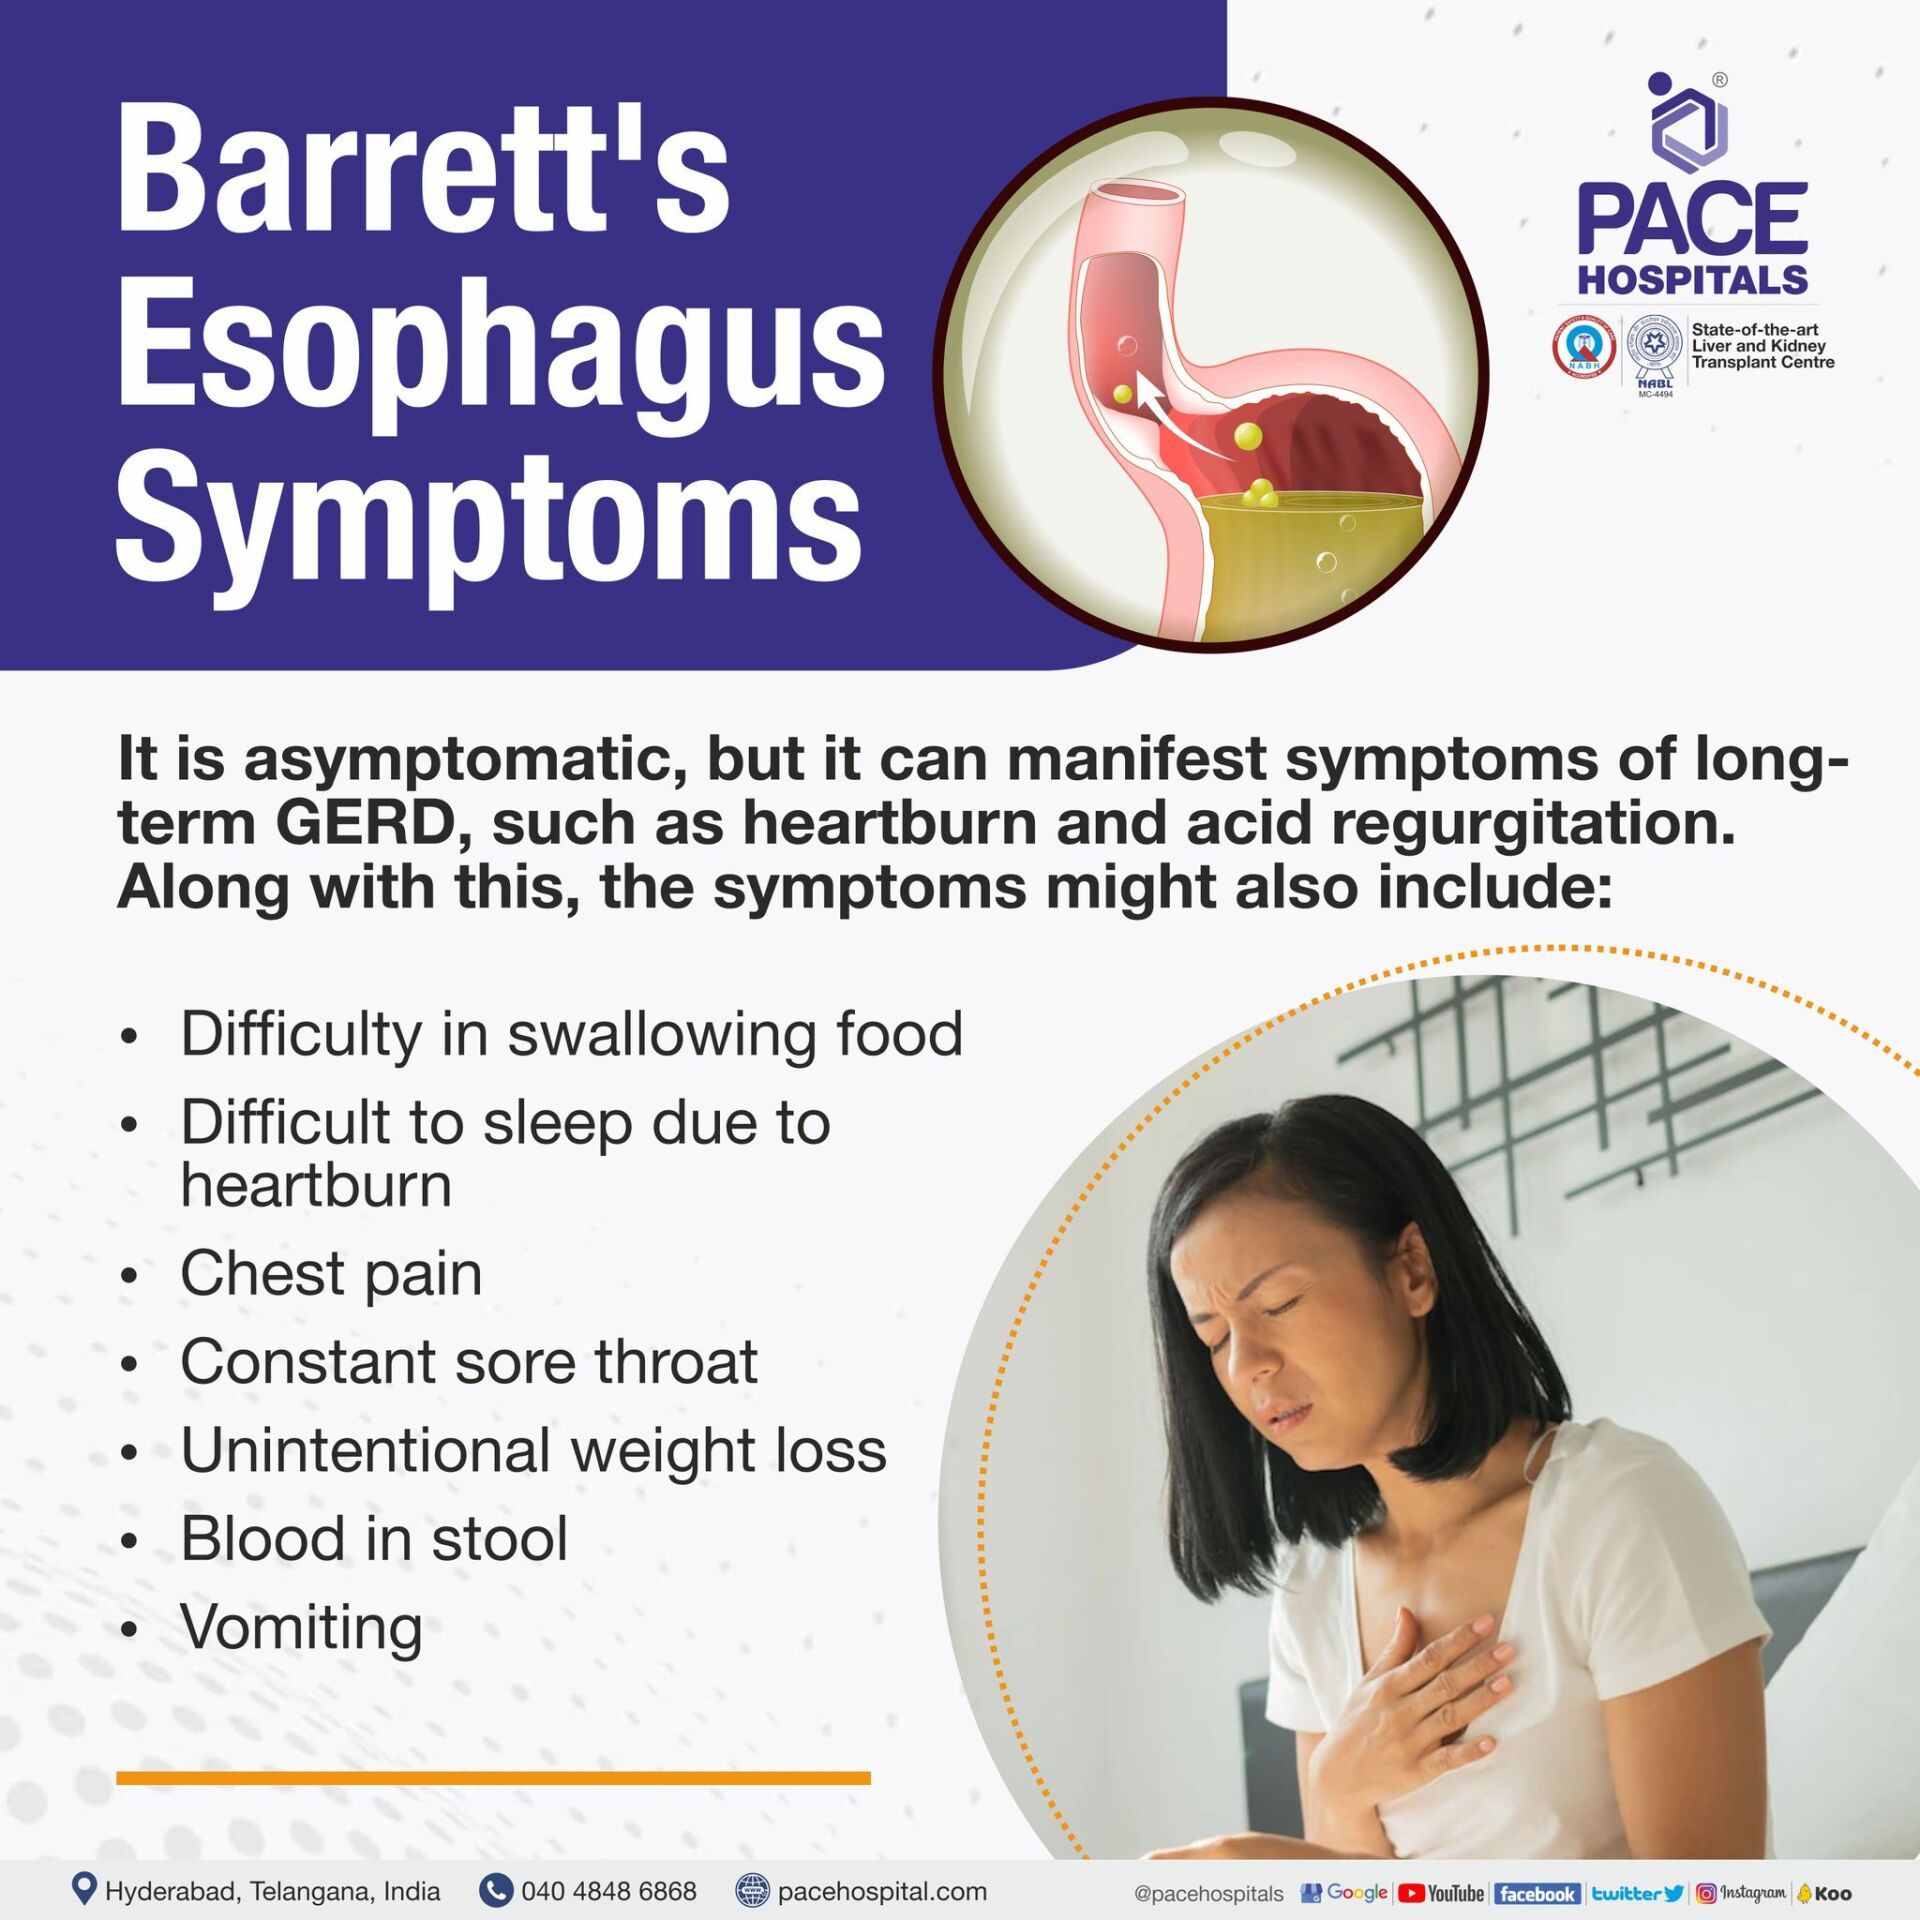 barrett's esophagus symptoms | barrett's esophagus symptoms causes and treatments